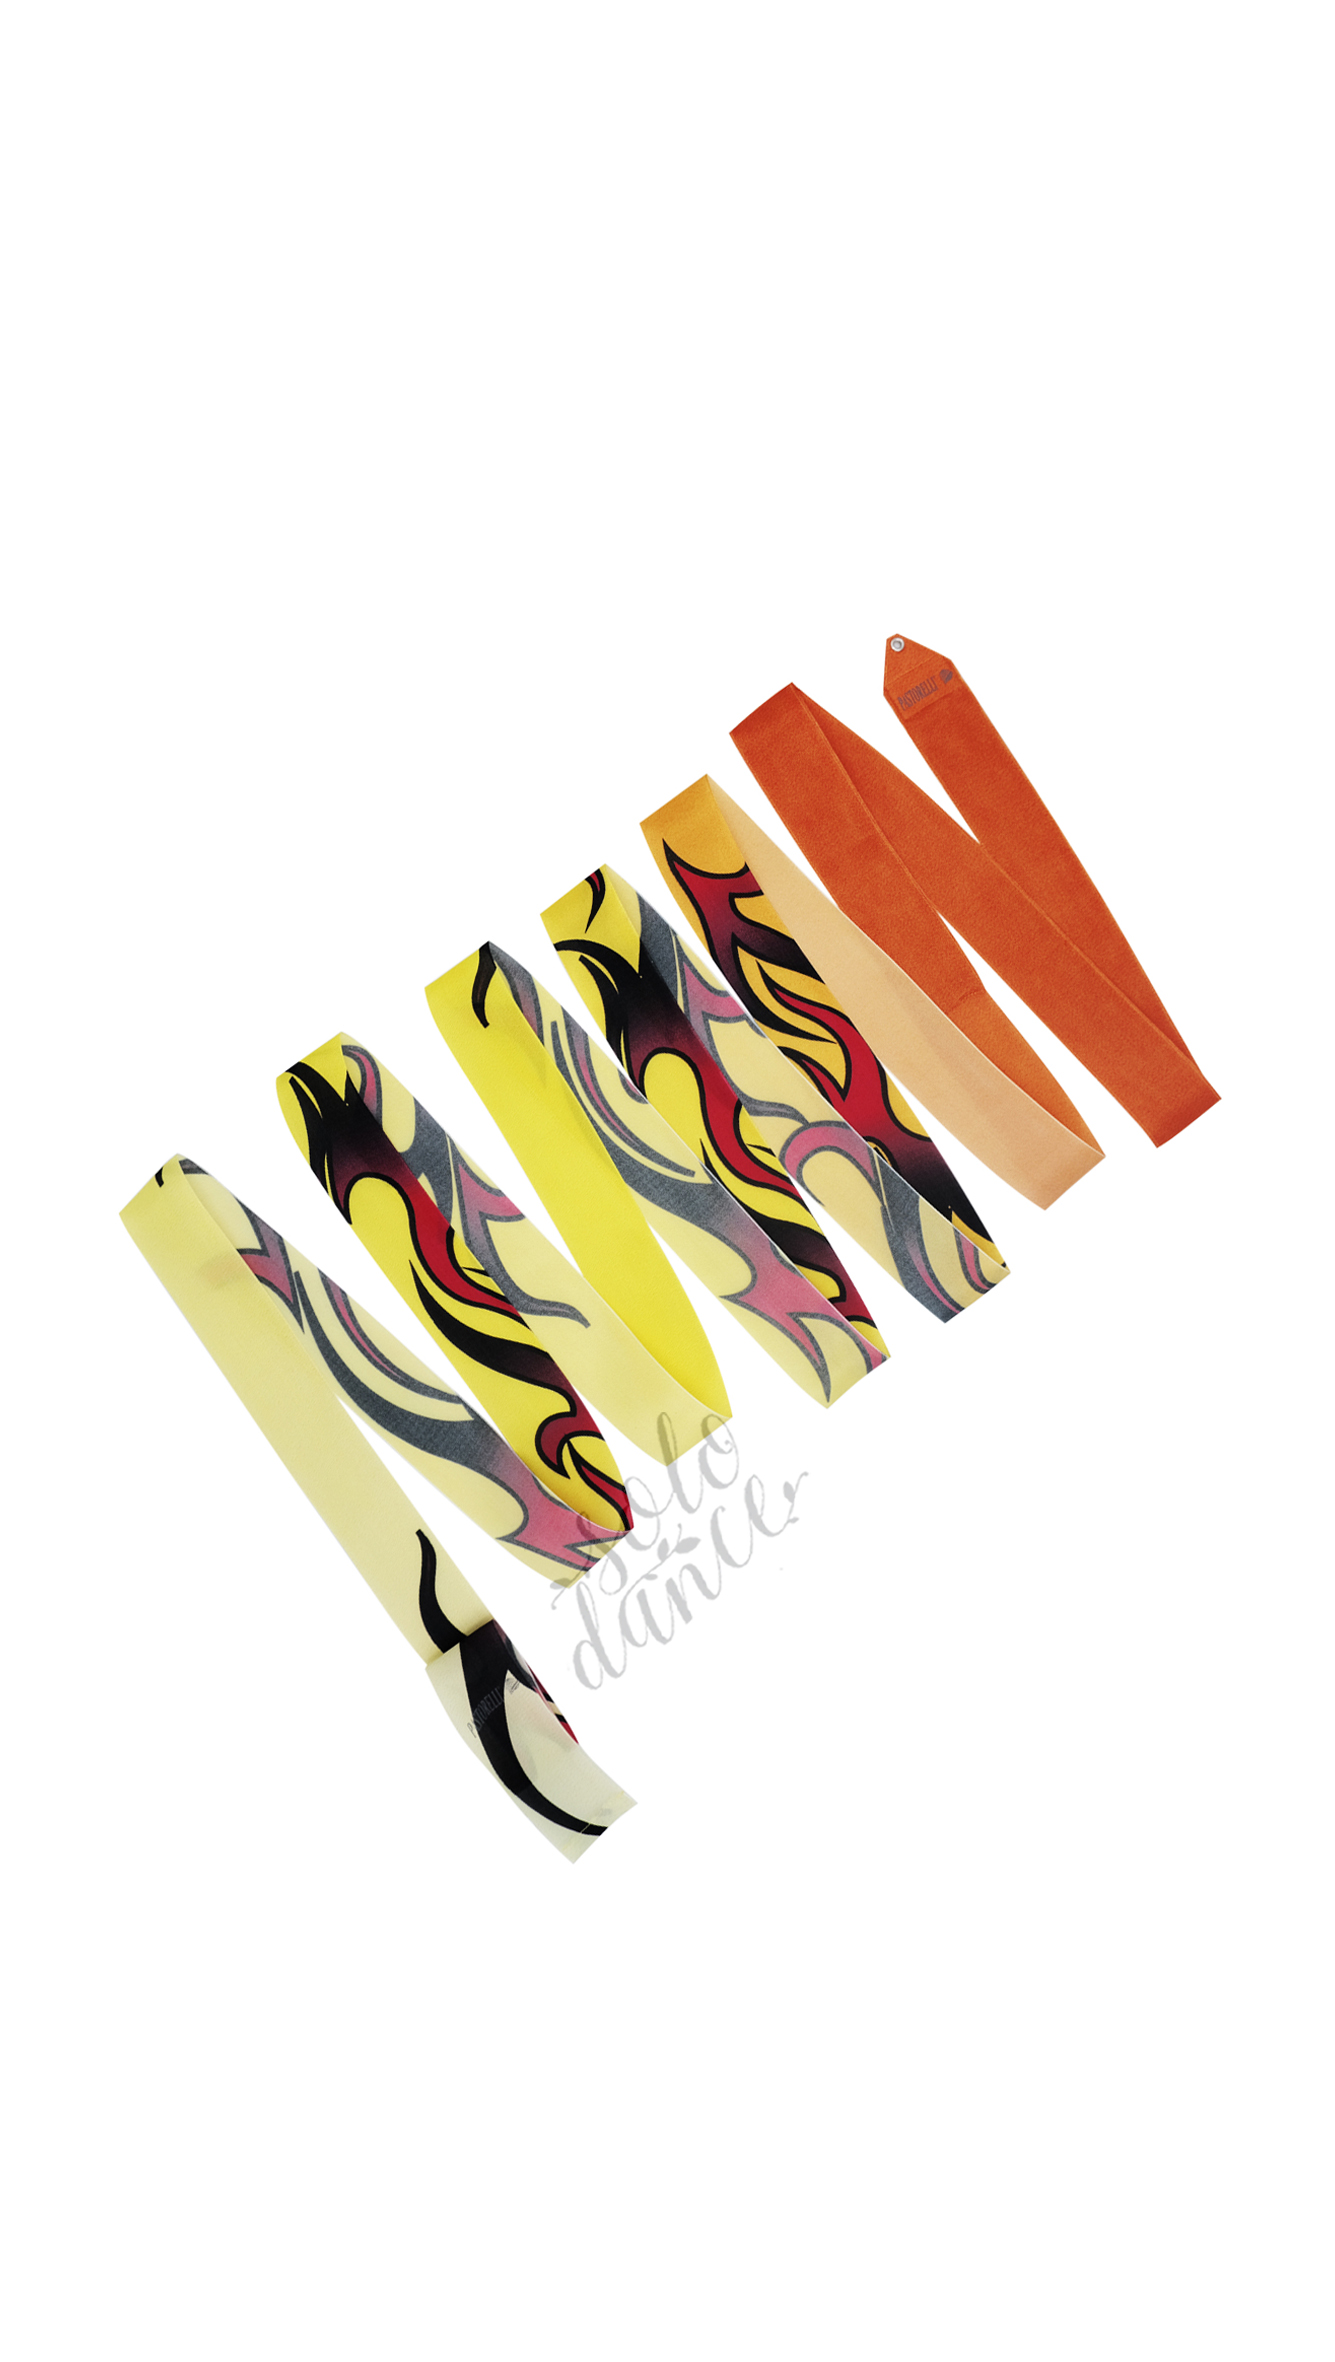 Pastorelli Luxury ARCHE' FLAME gymnastic ribbon 5 m 05989 Orange-Yellow-Light yellow FIG